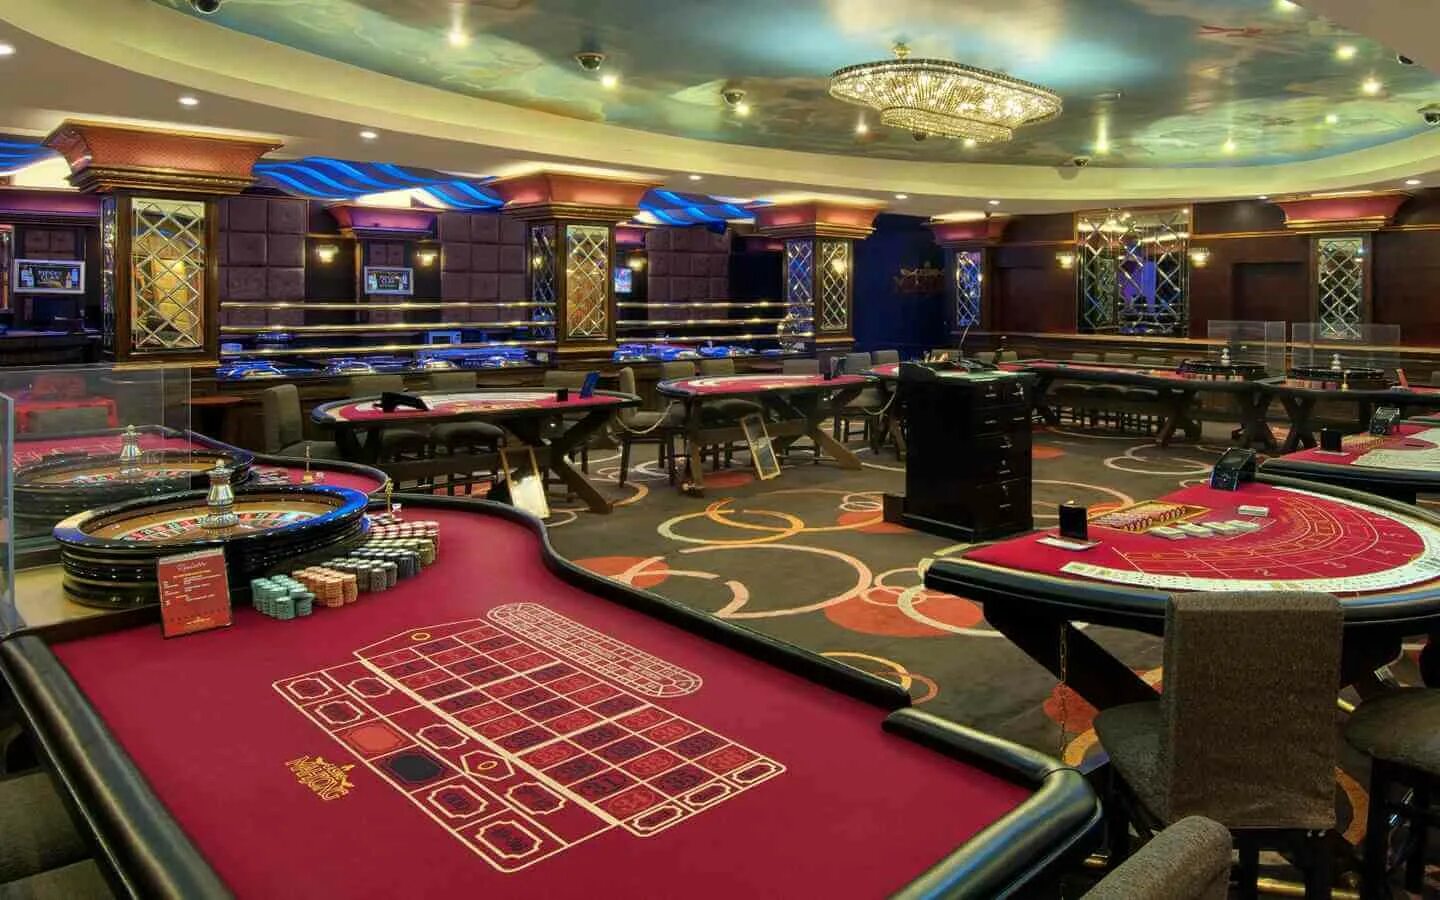 Casino grand vegasgrandplay